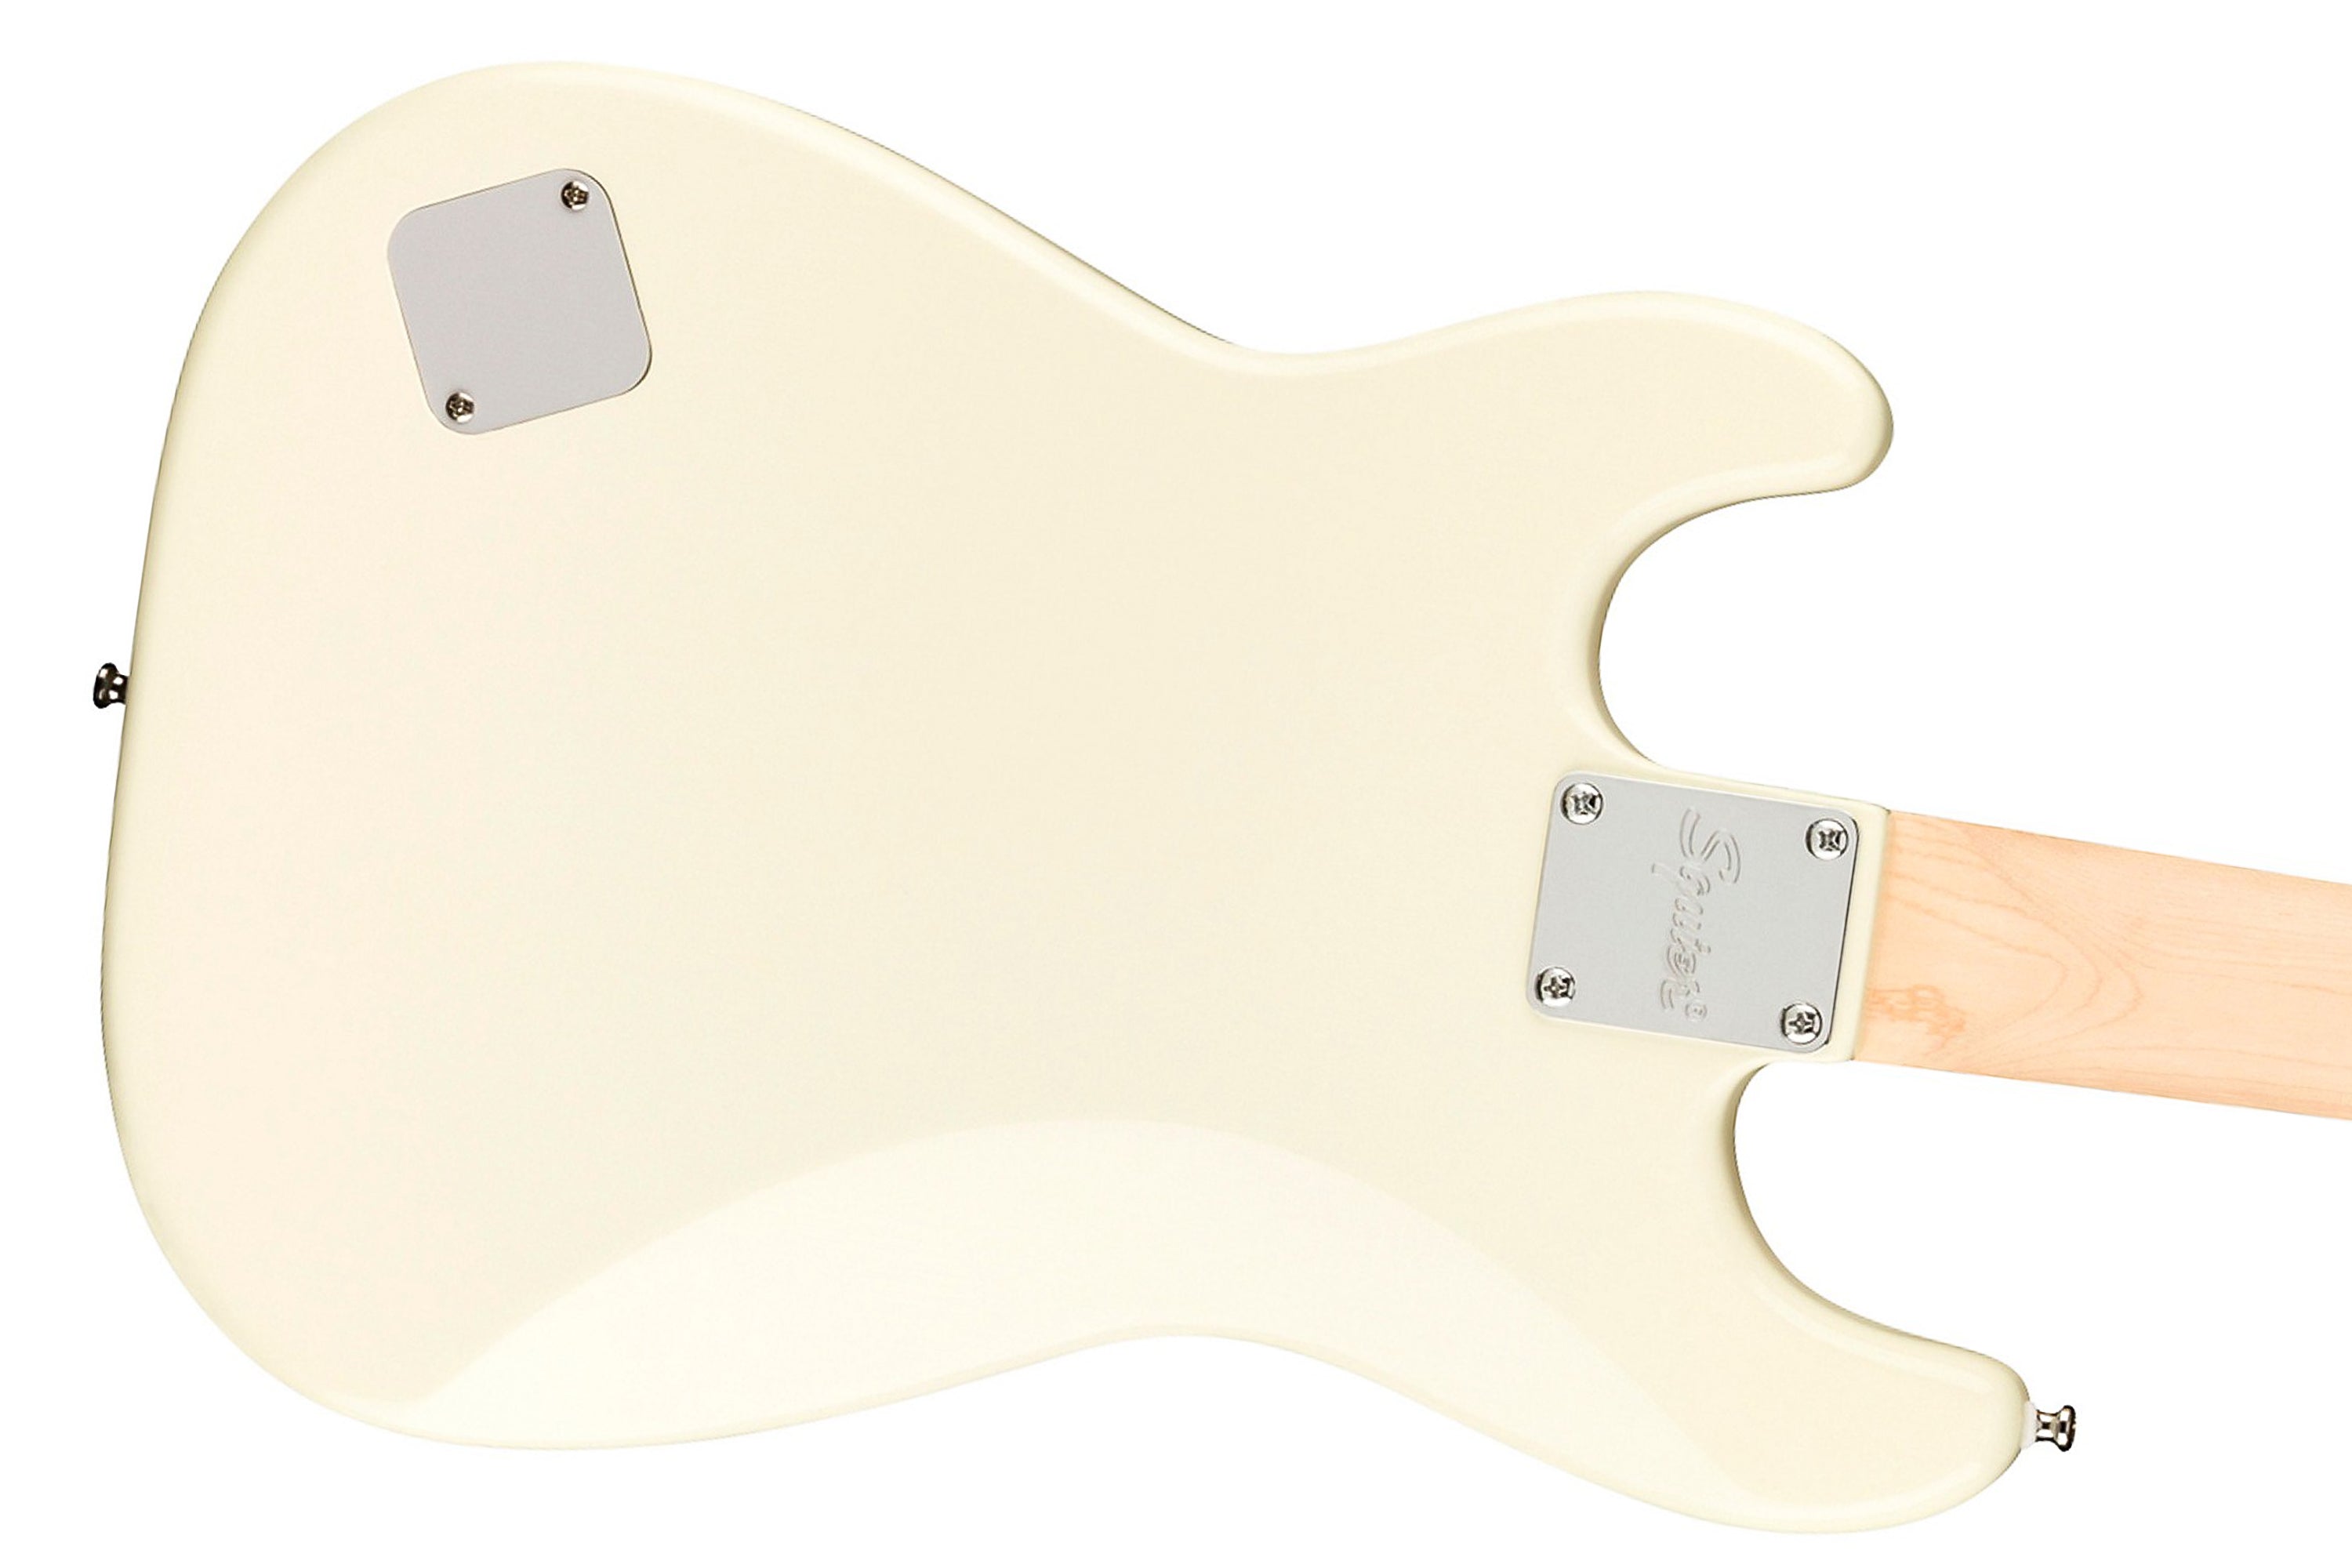 Squire By Fender Mini Stratocaster Guitar - White